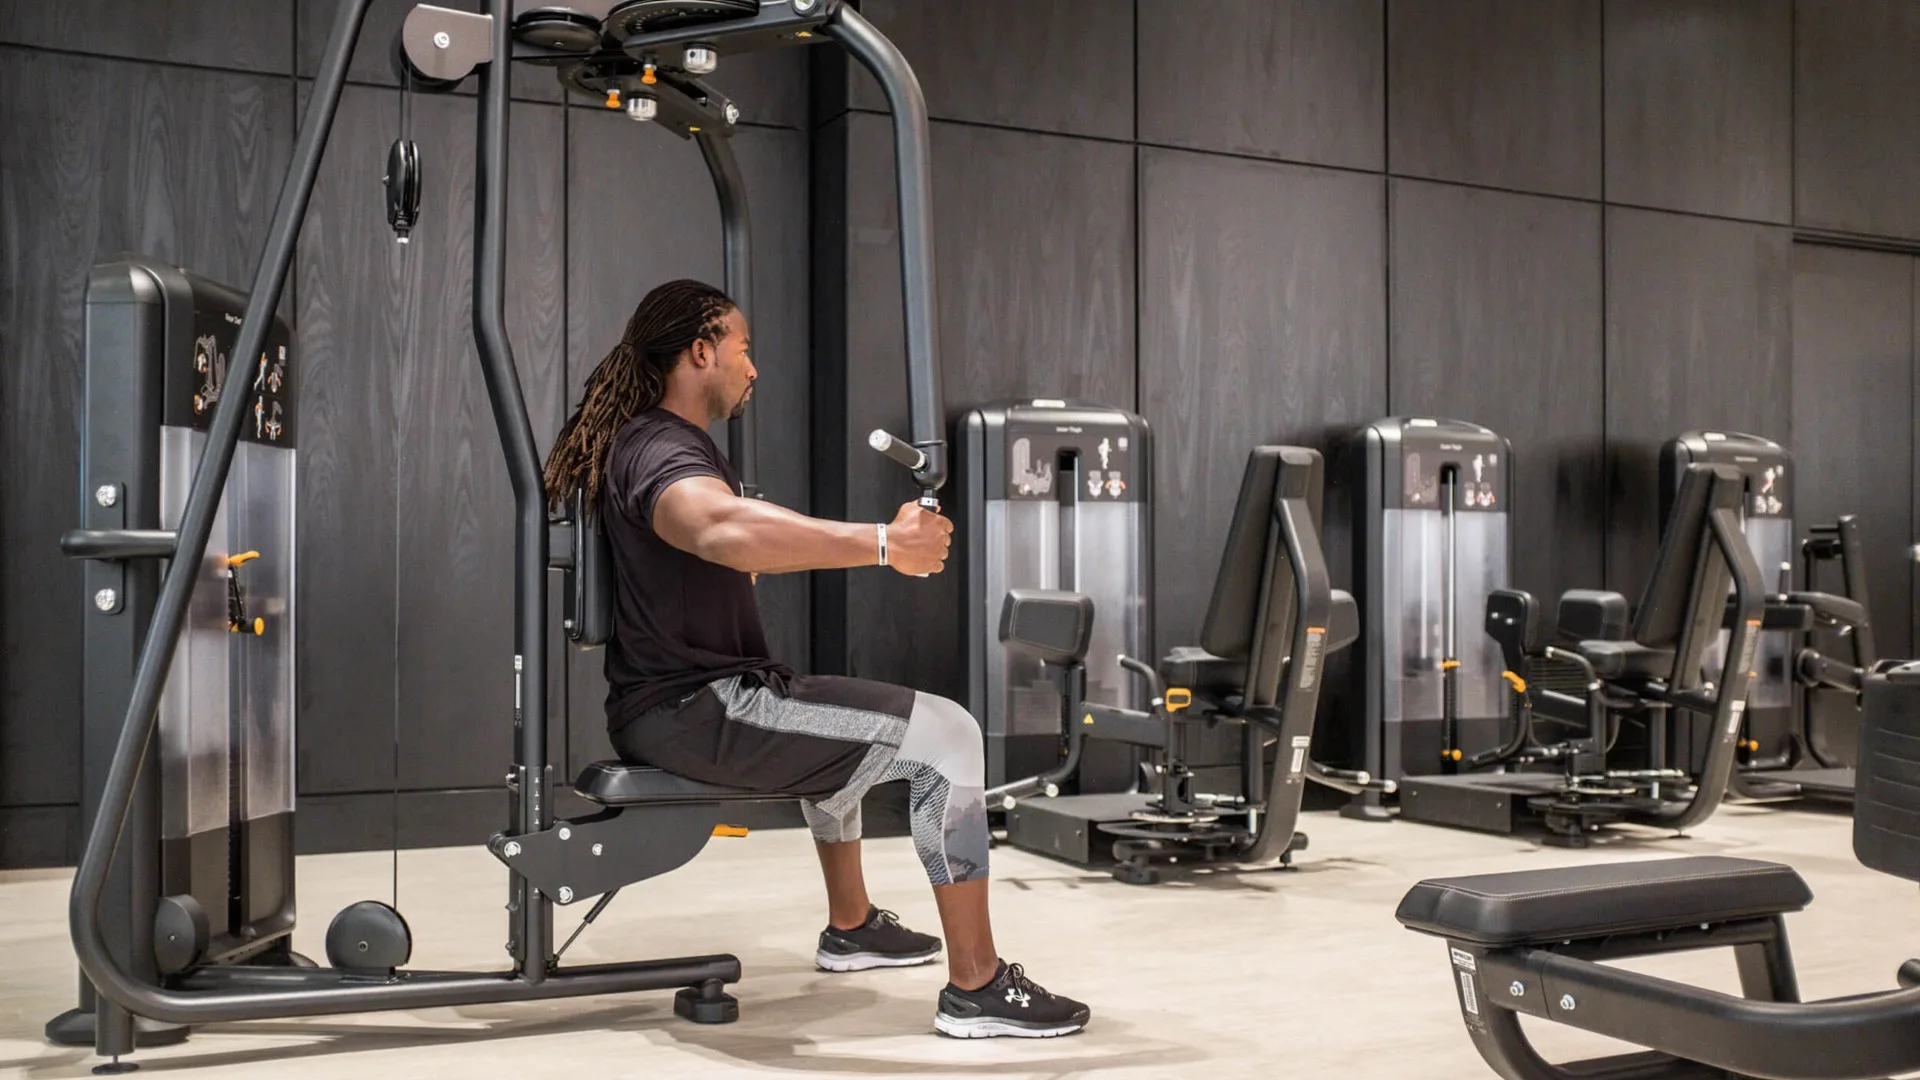 Exerciser using Precor strength equipment in a gym